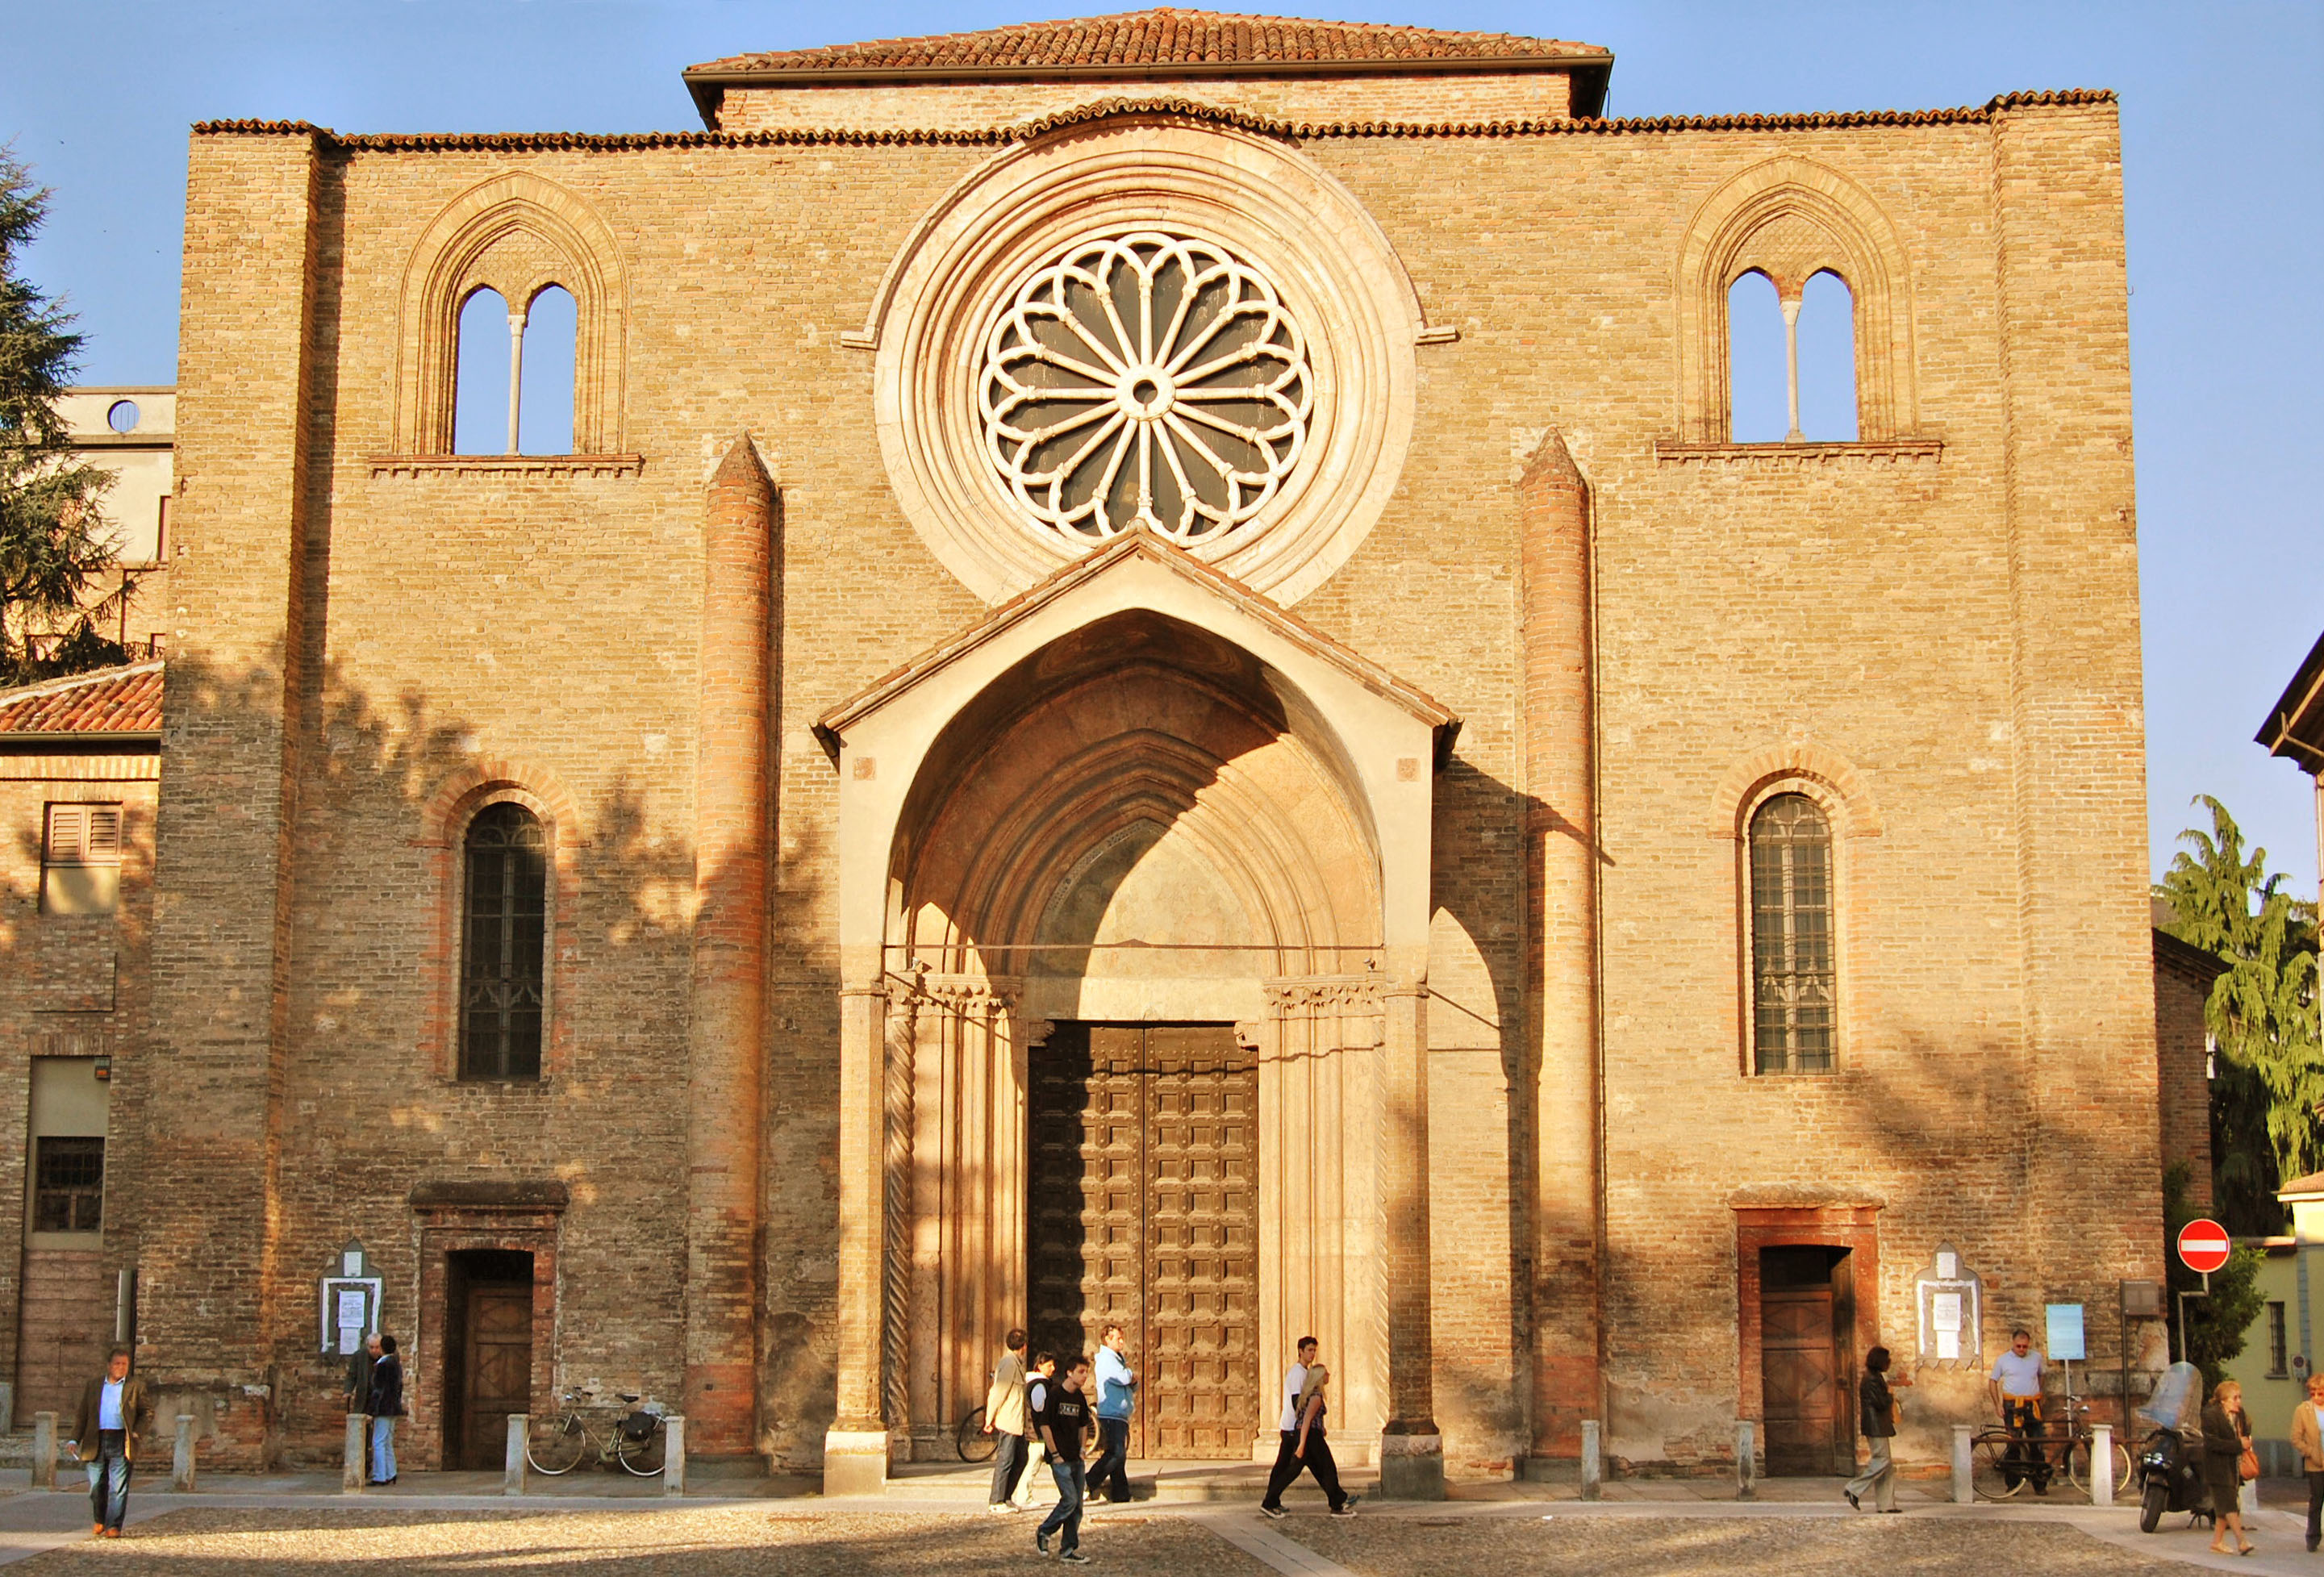 Chiesa di S. Francesco (chiesa) - Lodi (LO) 